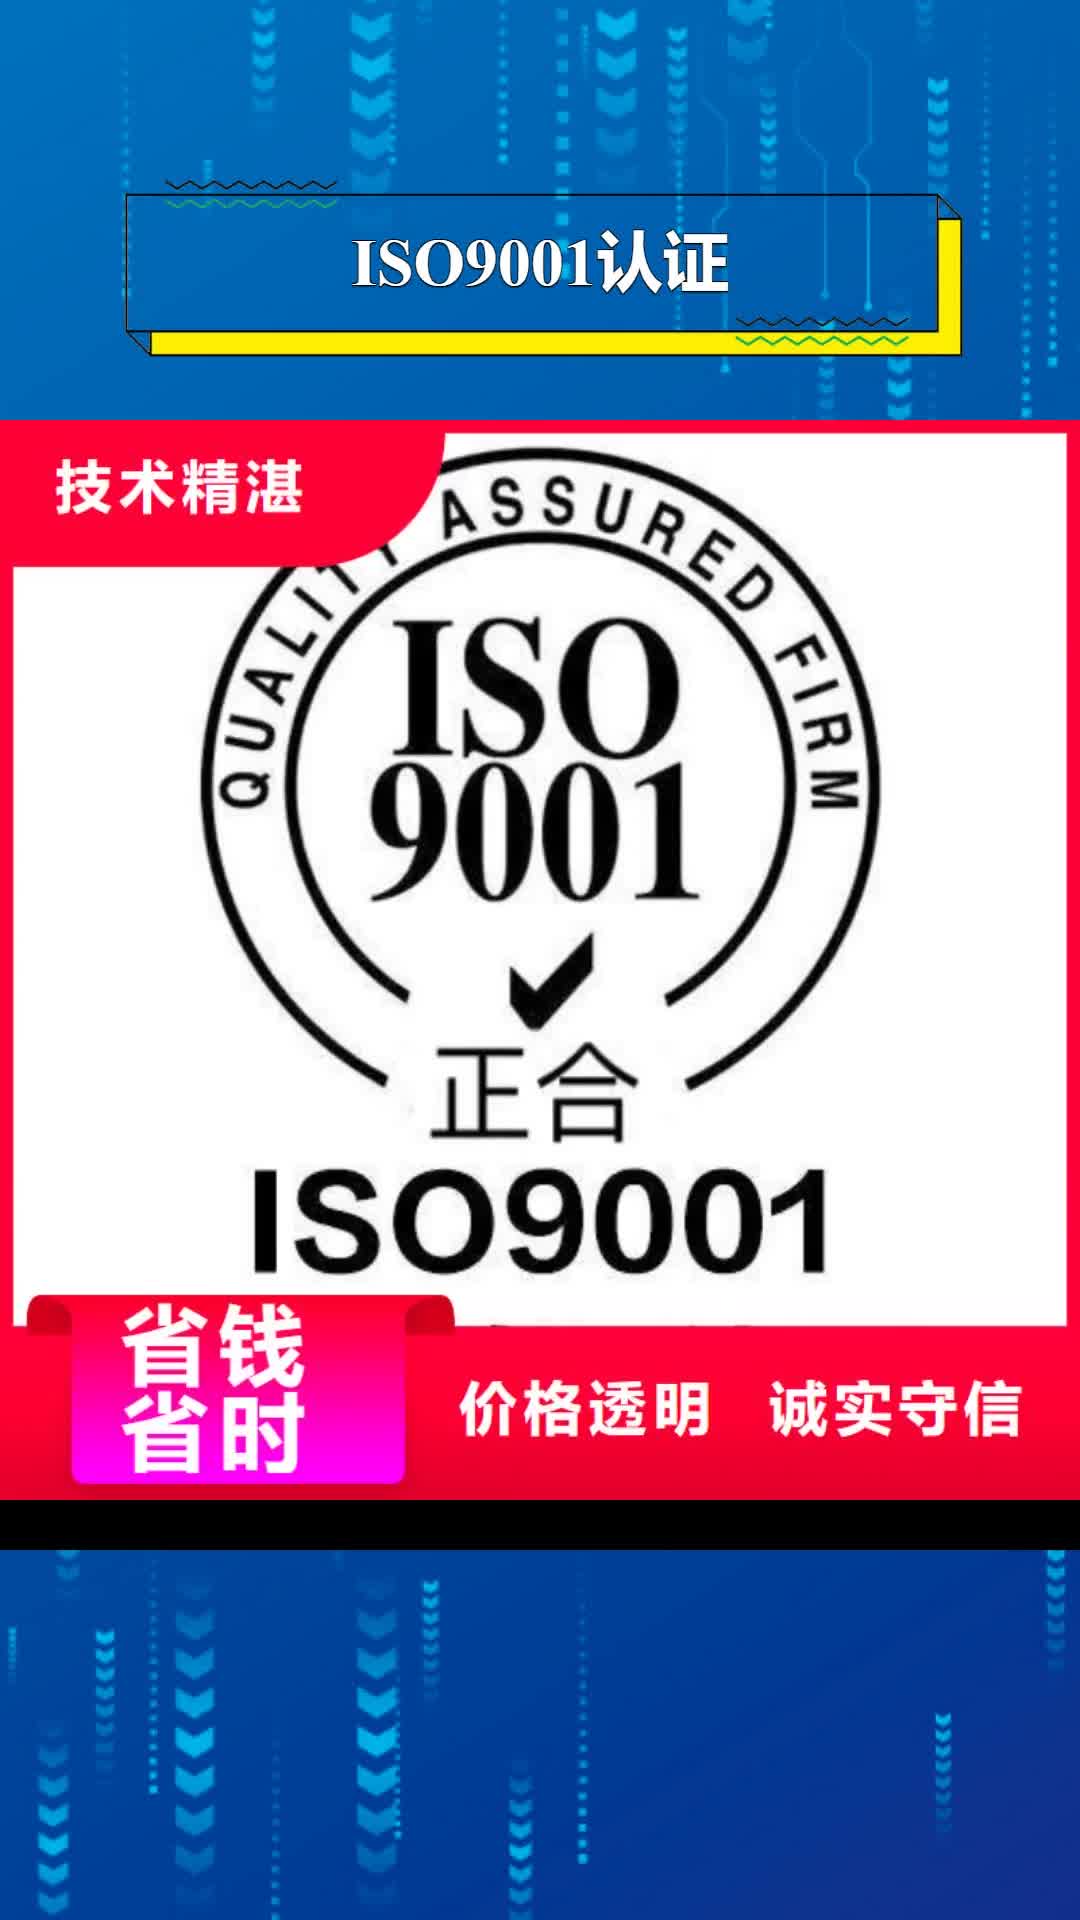 嘉峪关【ISO9001认证】IATF16949认证快速